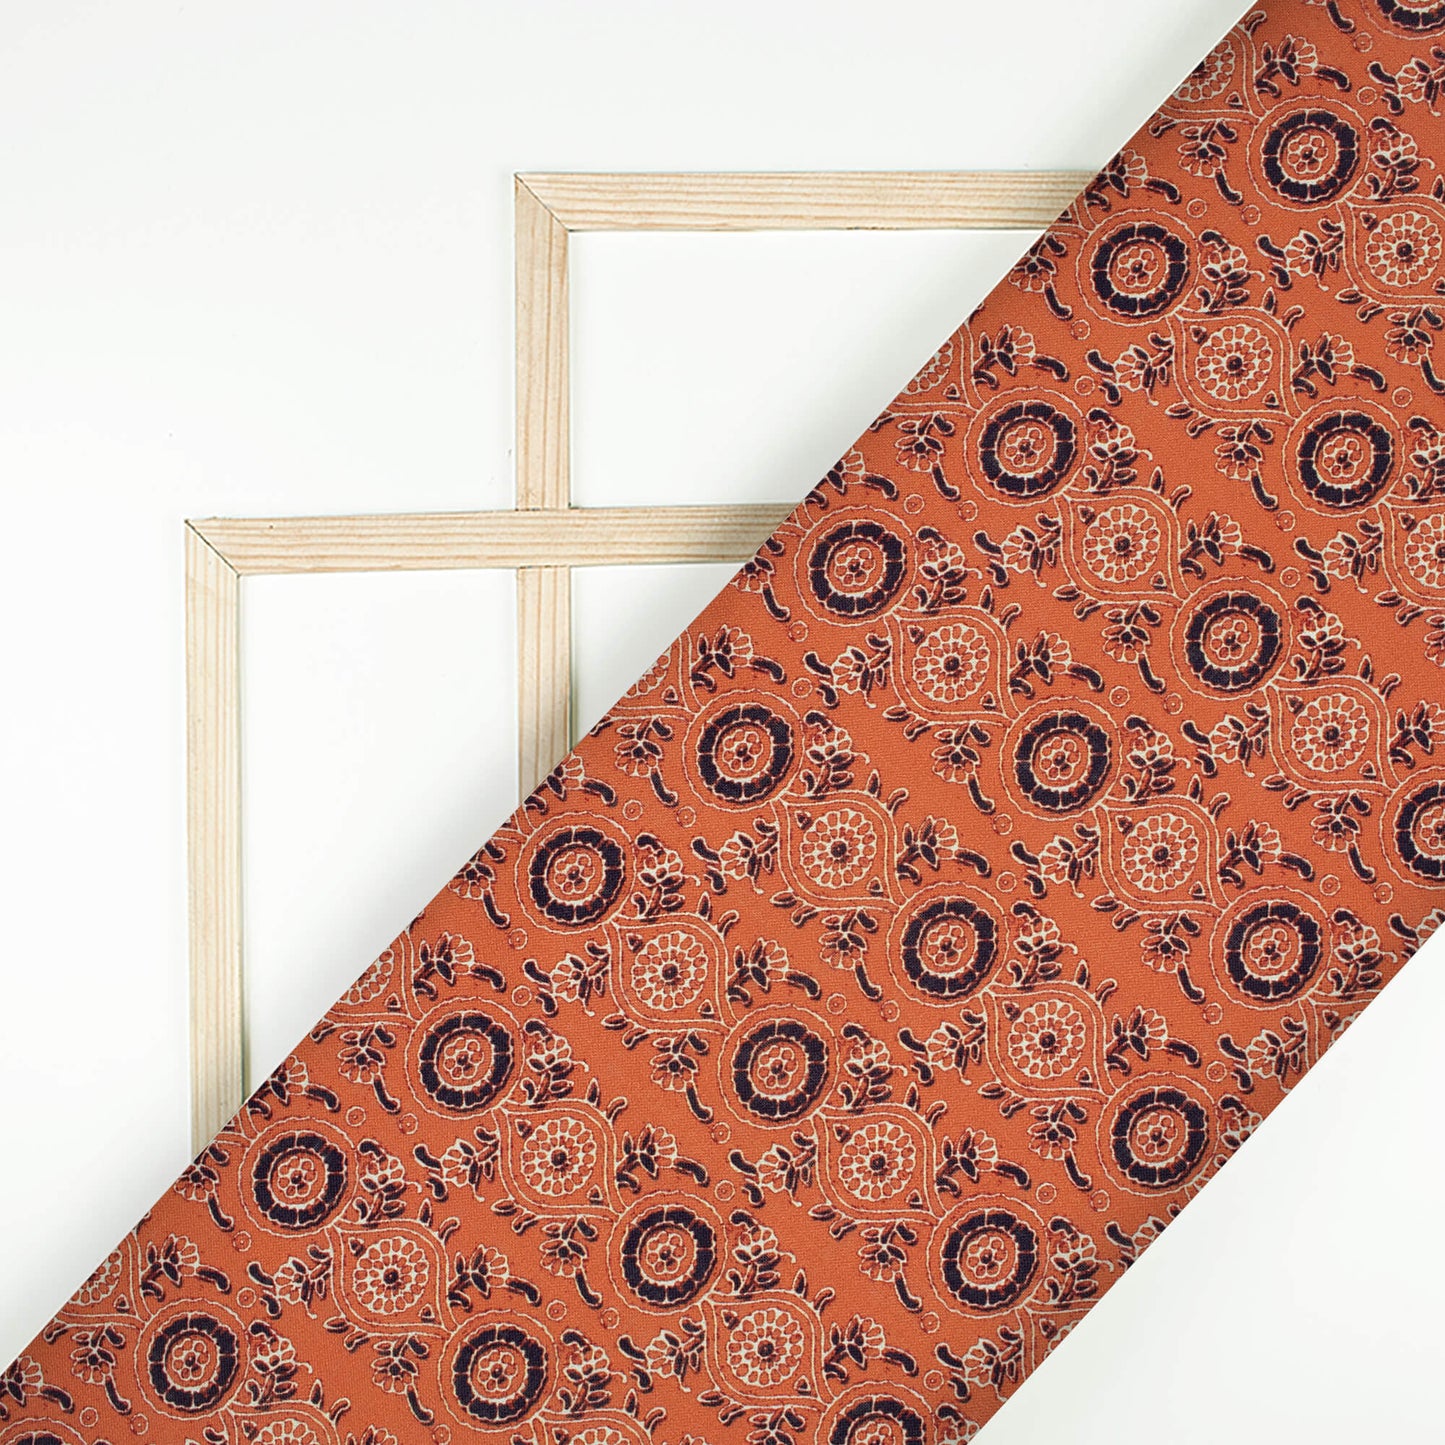 Burnt Orange And Black Ajrakh Pattern Digital Print Linen Textured Fabric (Width 56 Inches)